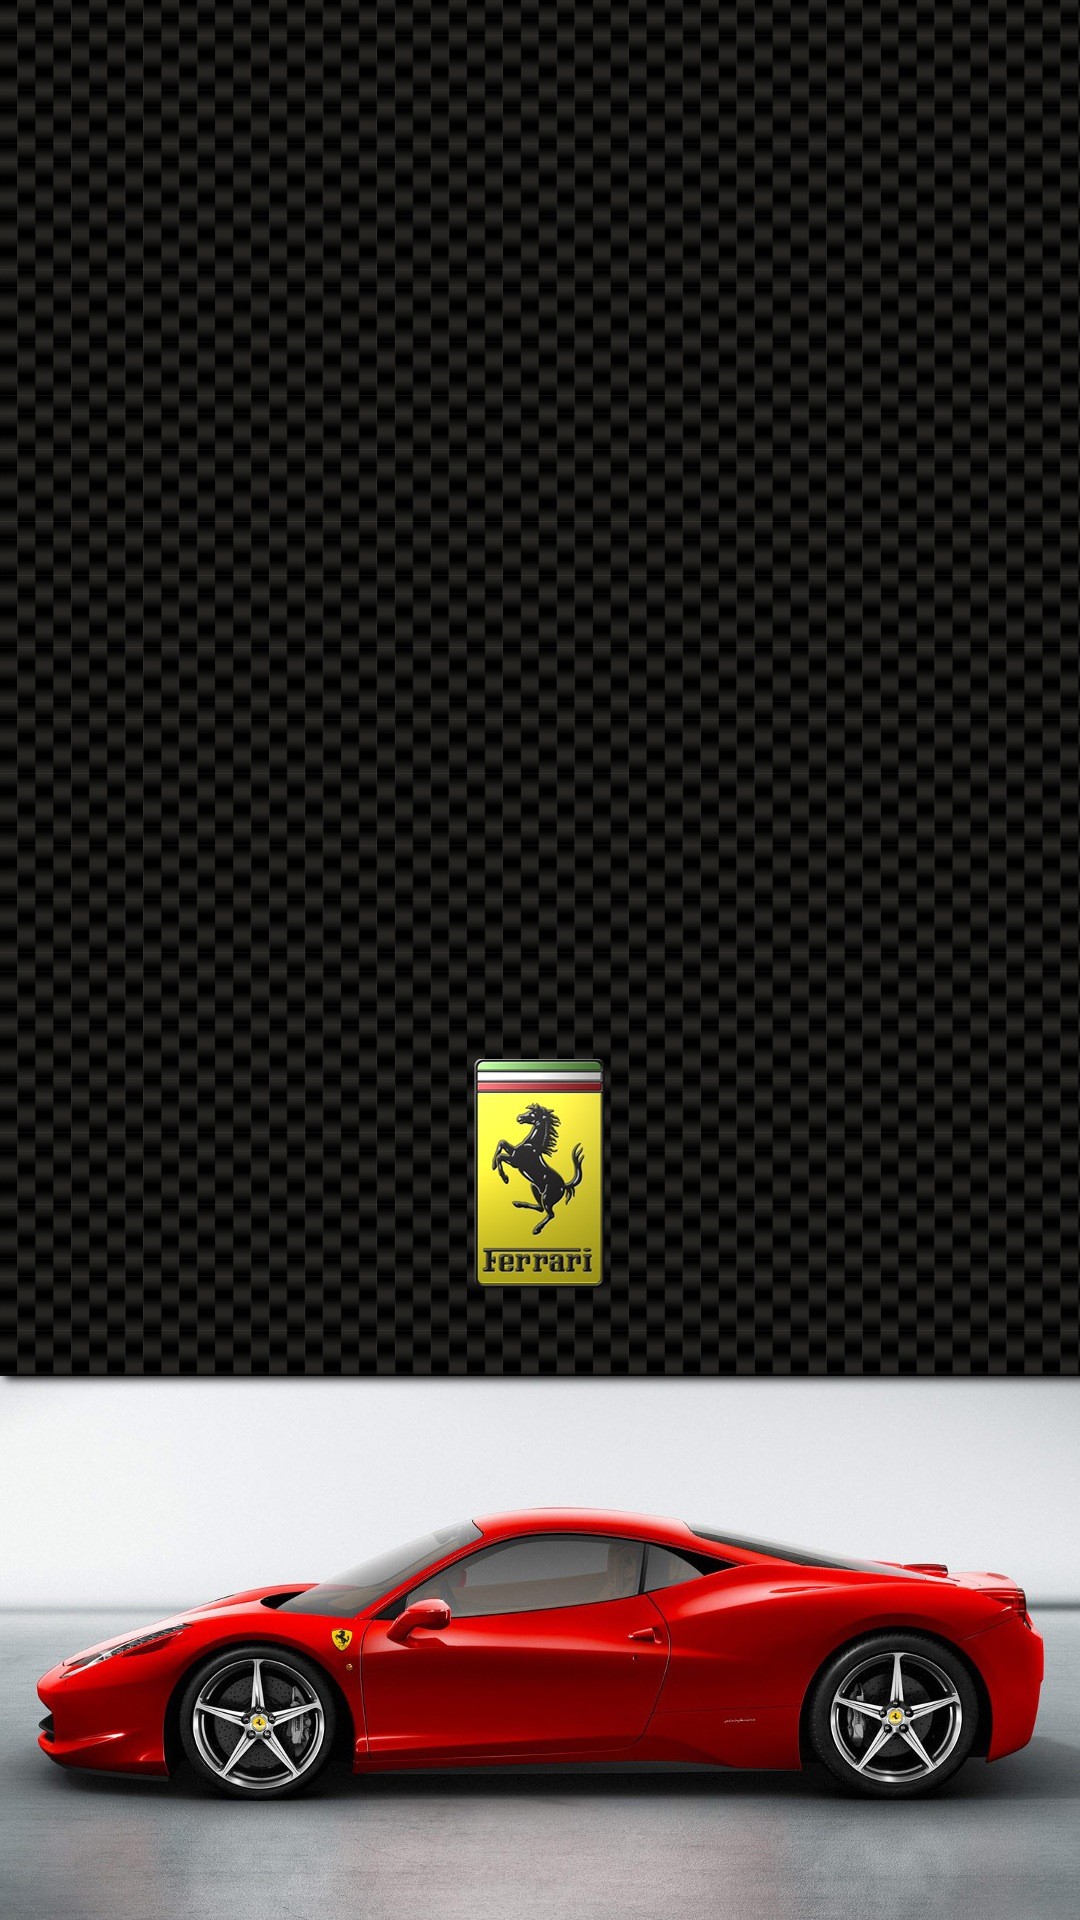 1080x1920 Ferrari 458 Italia Lock Screen iPhone 6 Plus HD Wallpaper ...